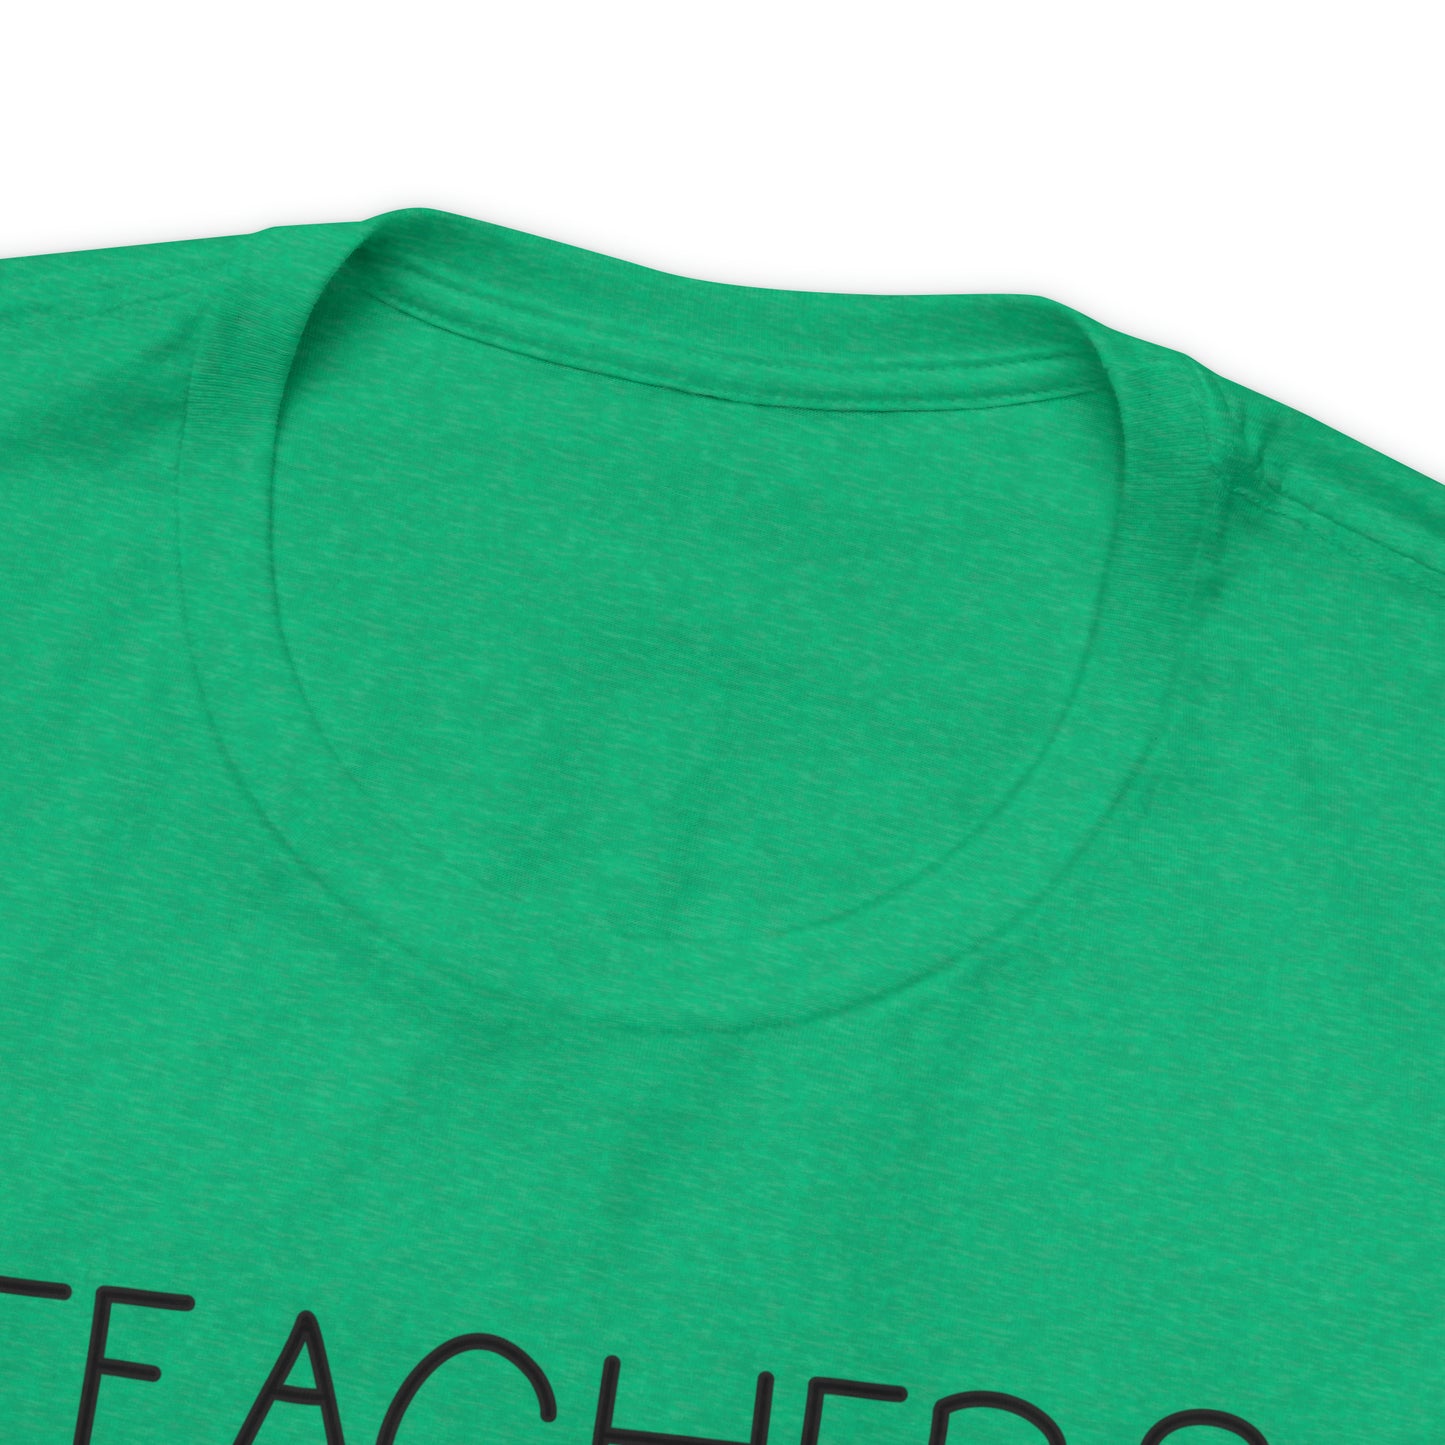 Teachers Gonna Teach T-Shirt